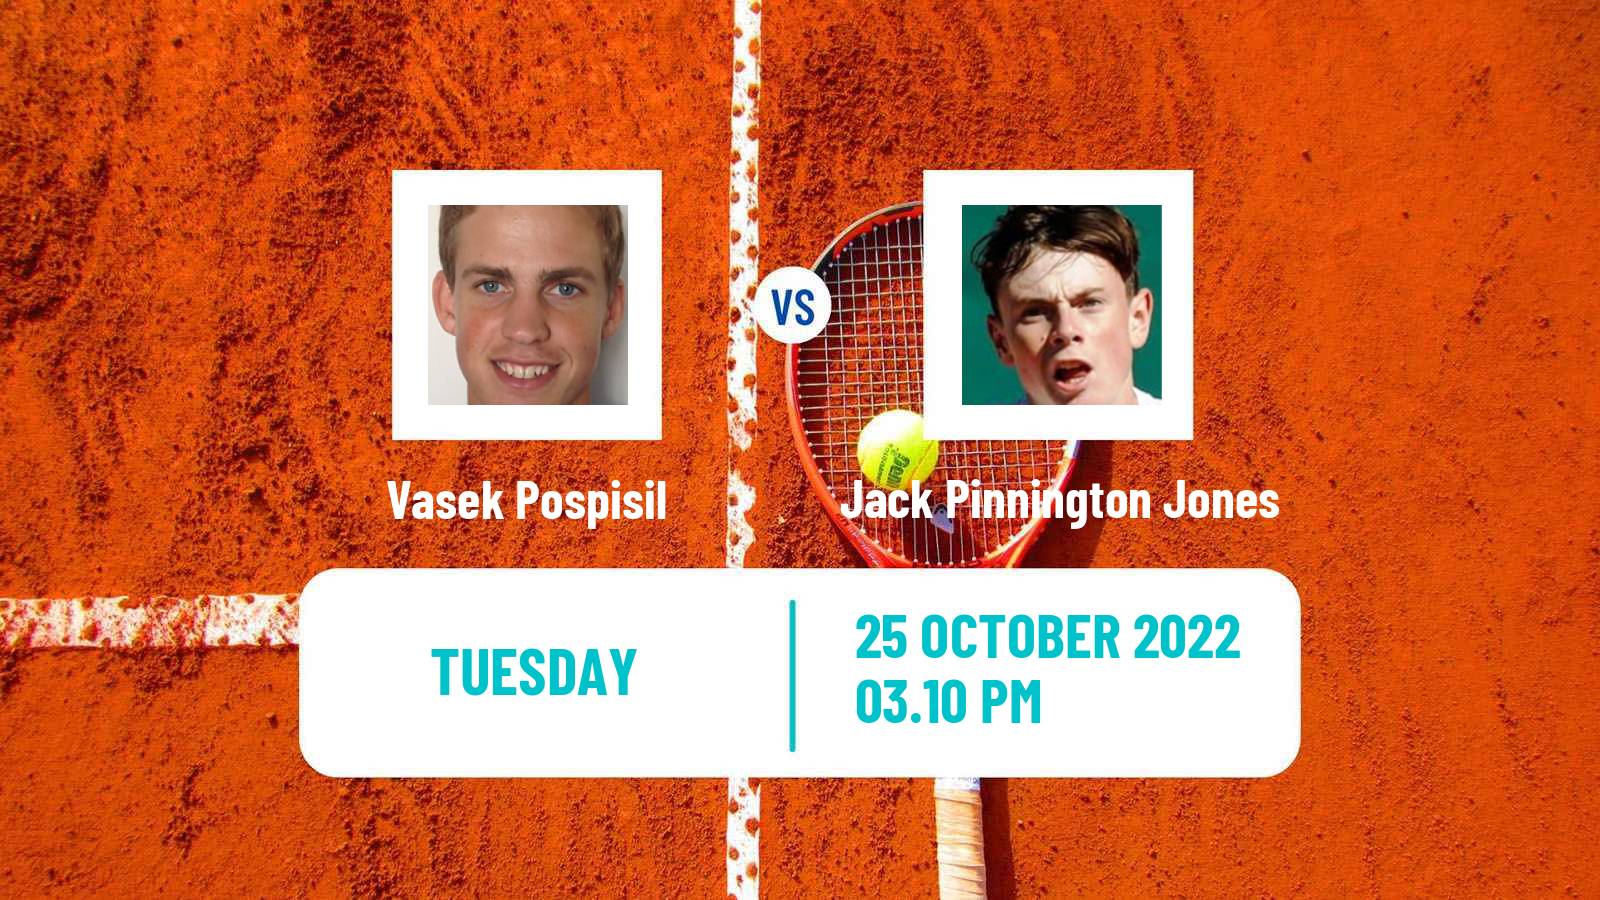 Tennis ATP Challenger Vasek Pospisil - Jack Pinnington Jones